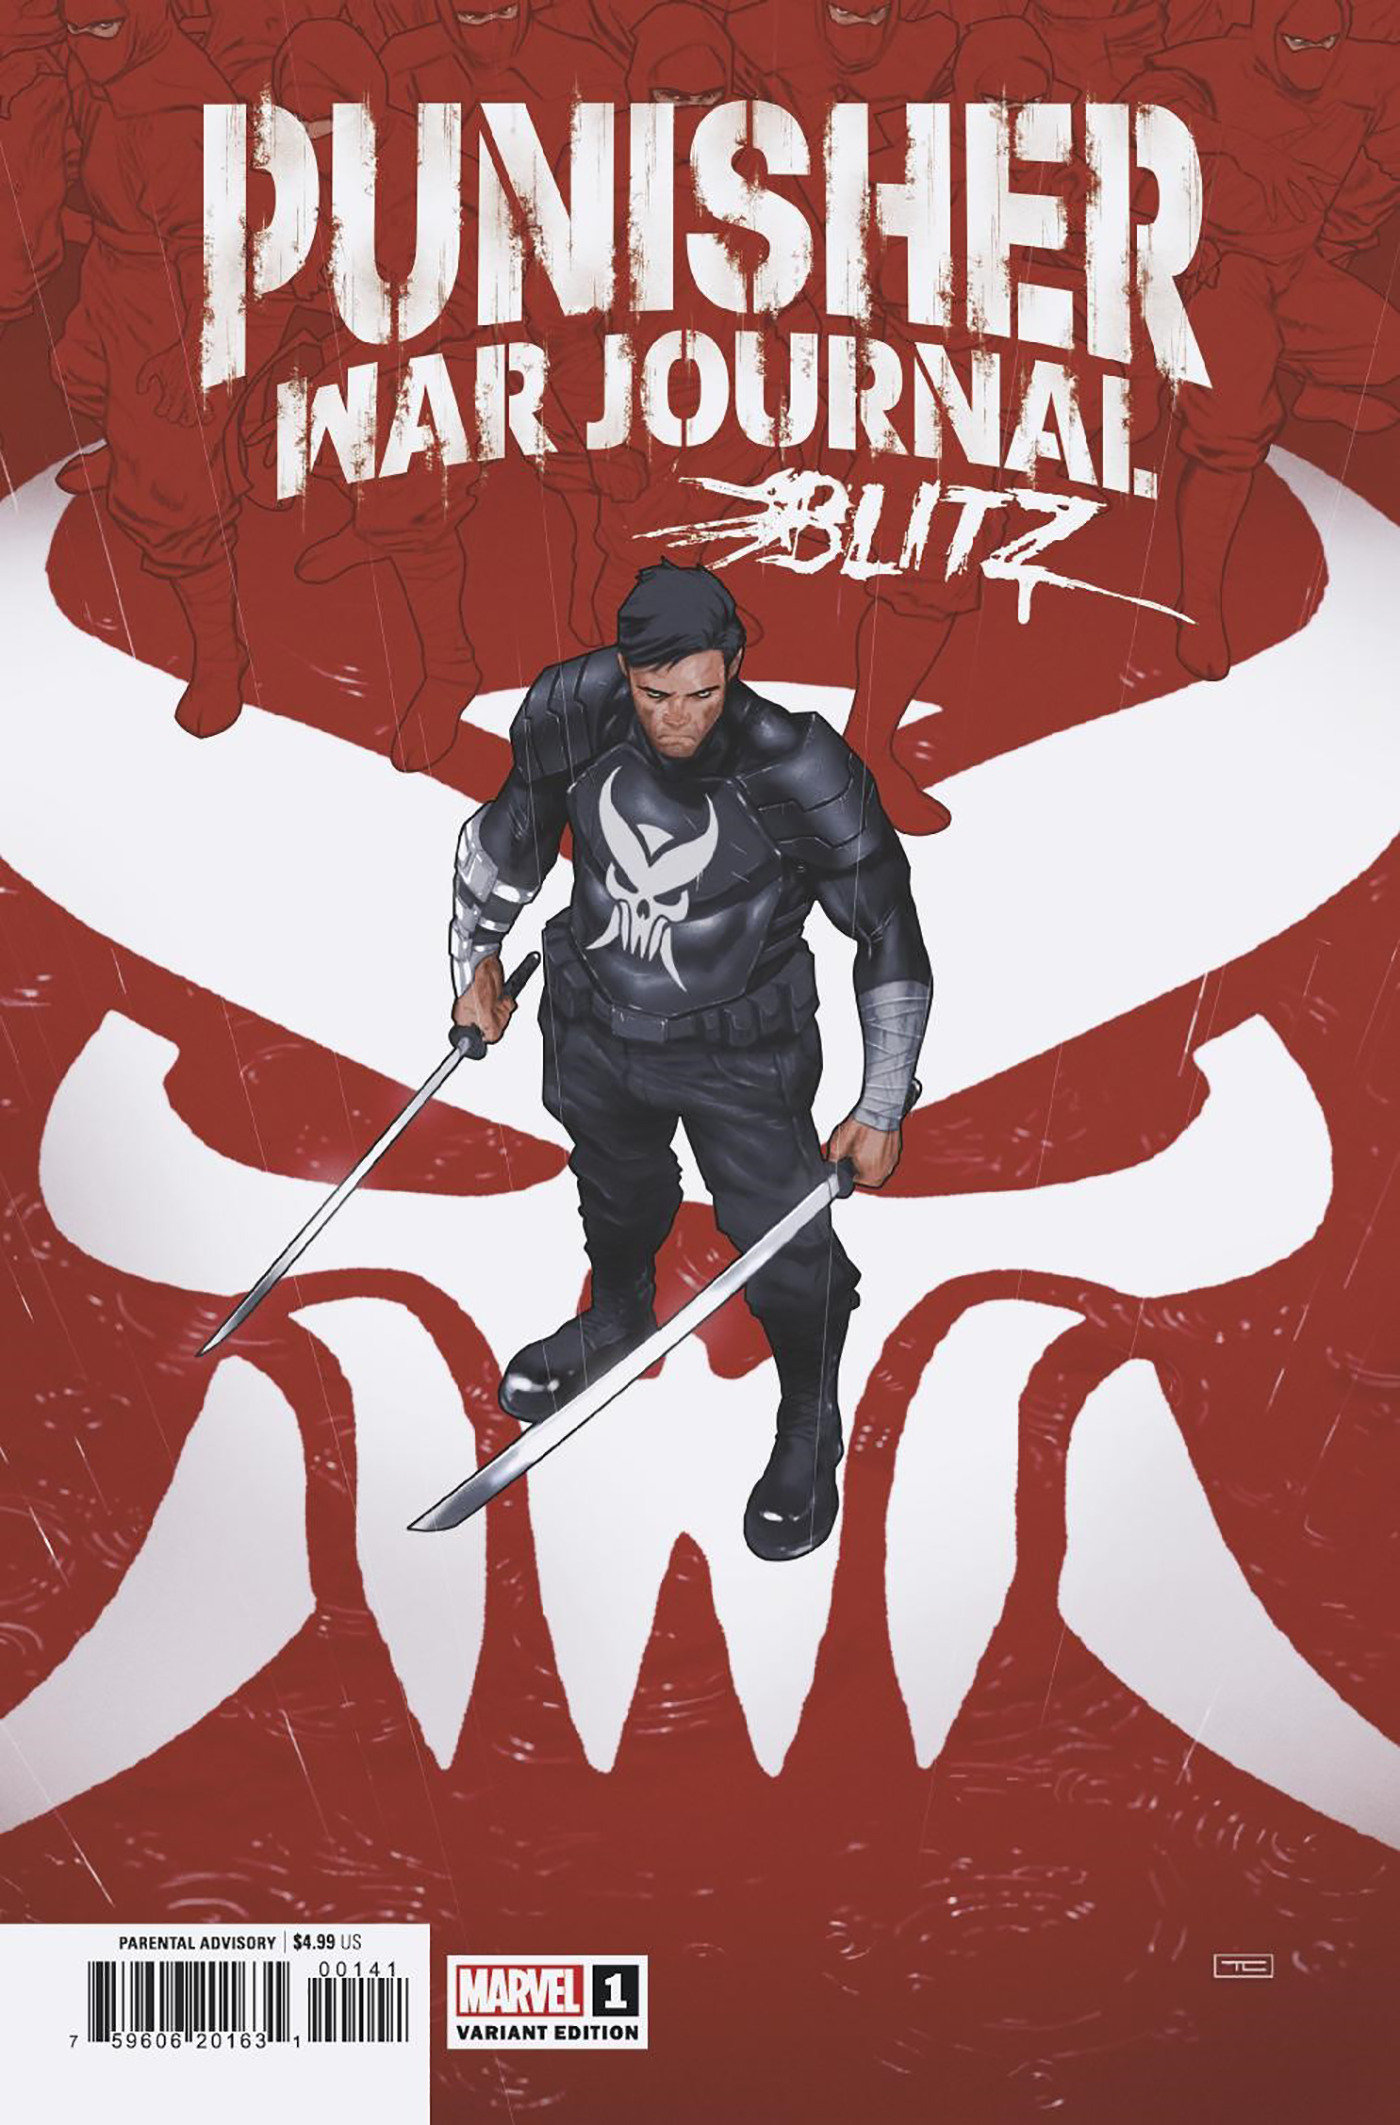 Punisher War Journal Blitz #1 1 for 25 Incentive Clarke Variant